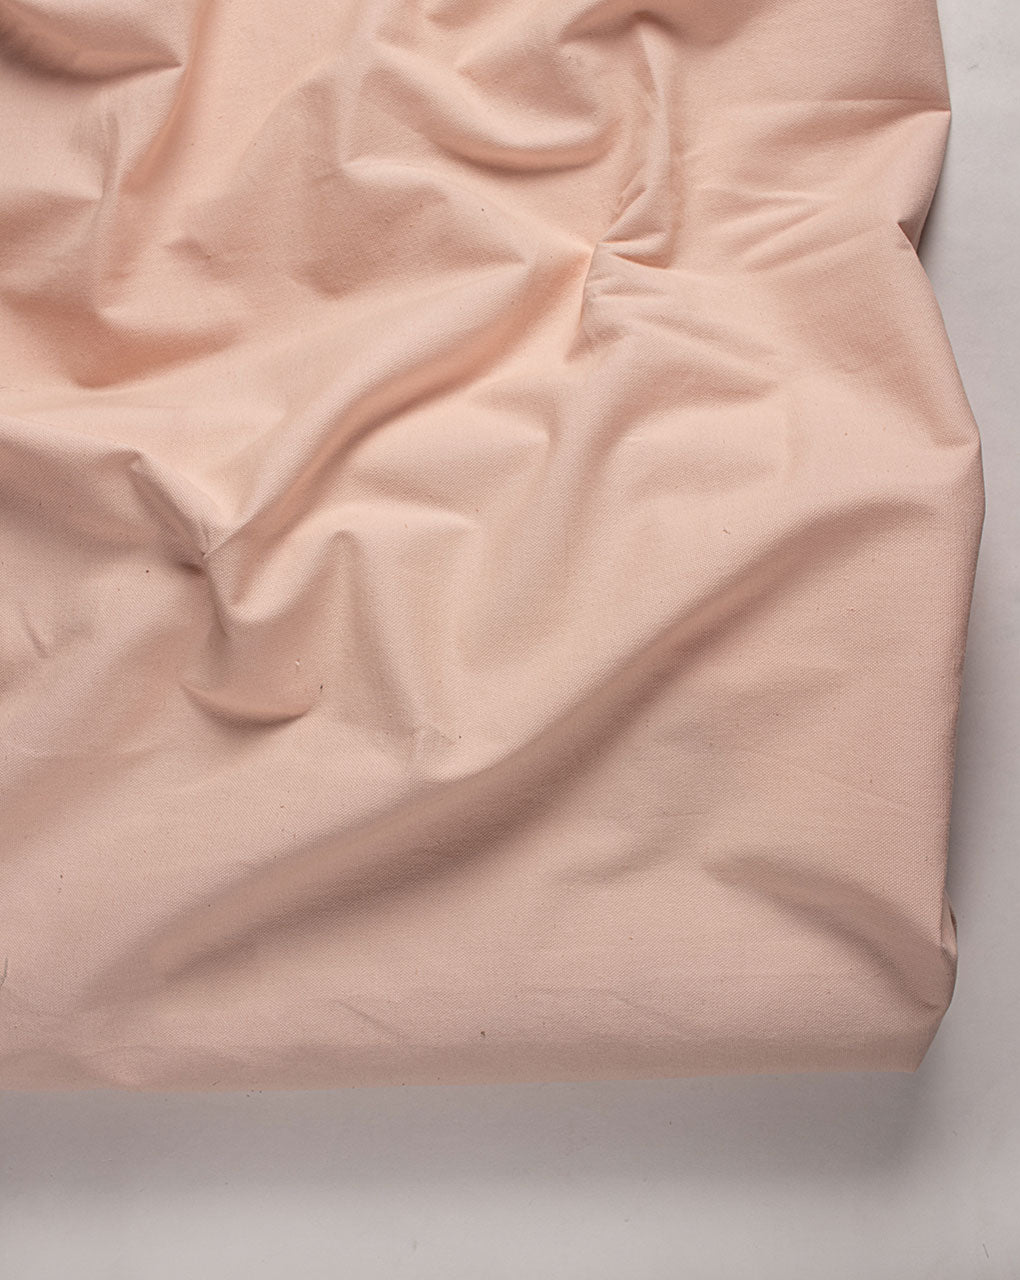 Salmon Plain Cotton Canvas Fabric ( Width 62 Inch )